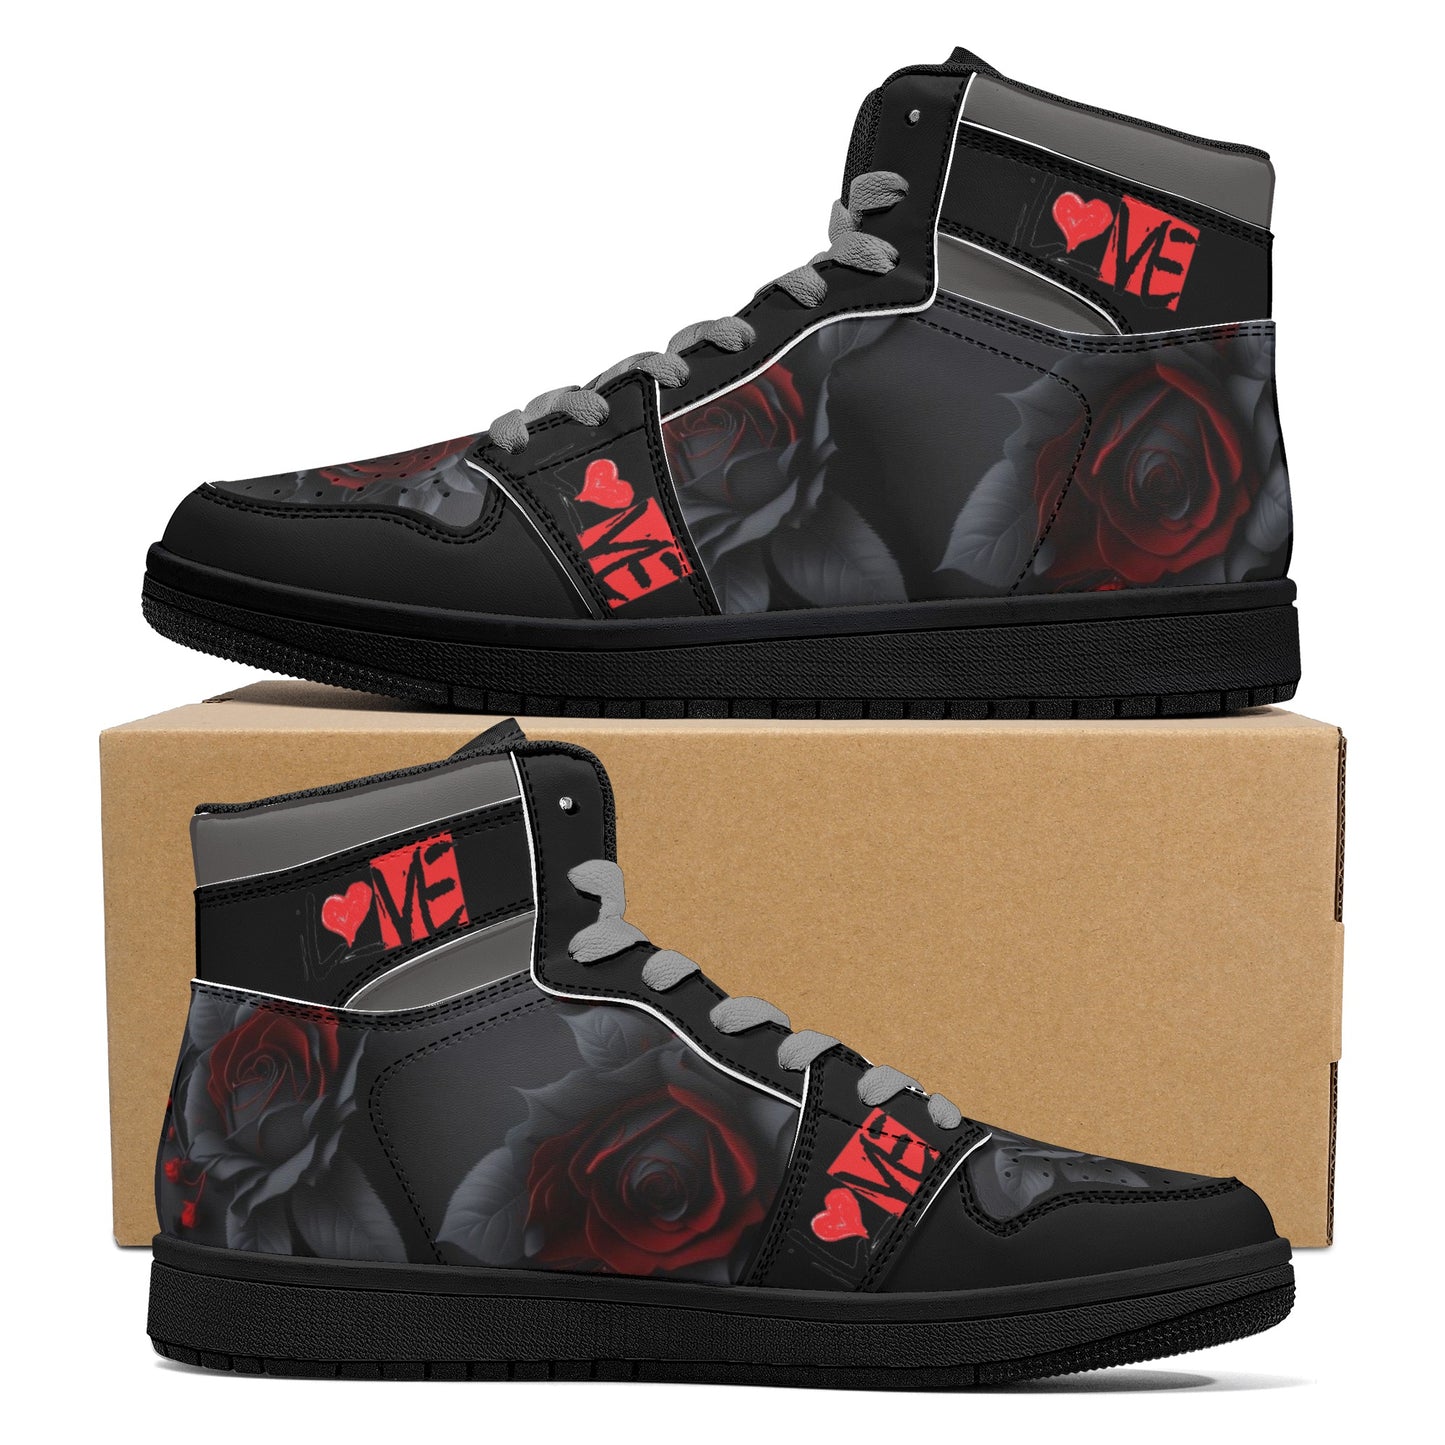 L❤️VE BLACK ROSE Mens Black High Top Leather Sneakers